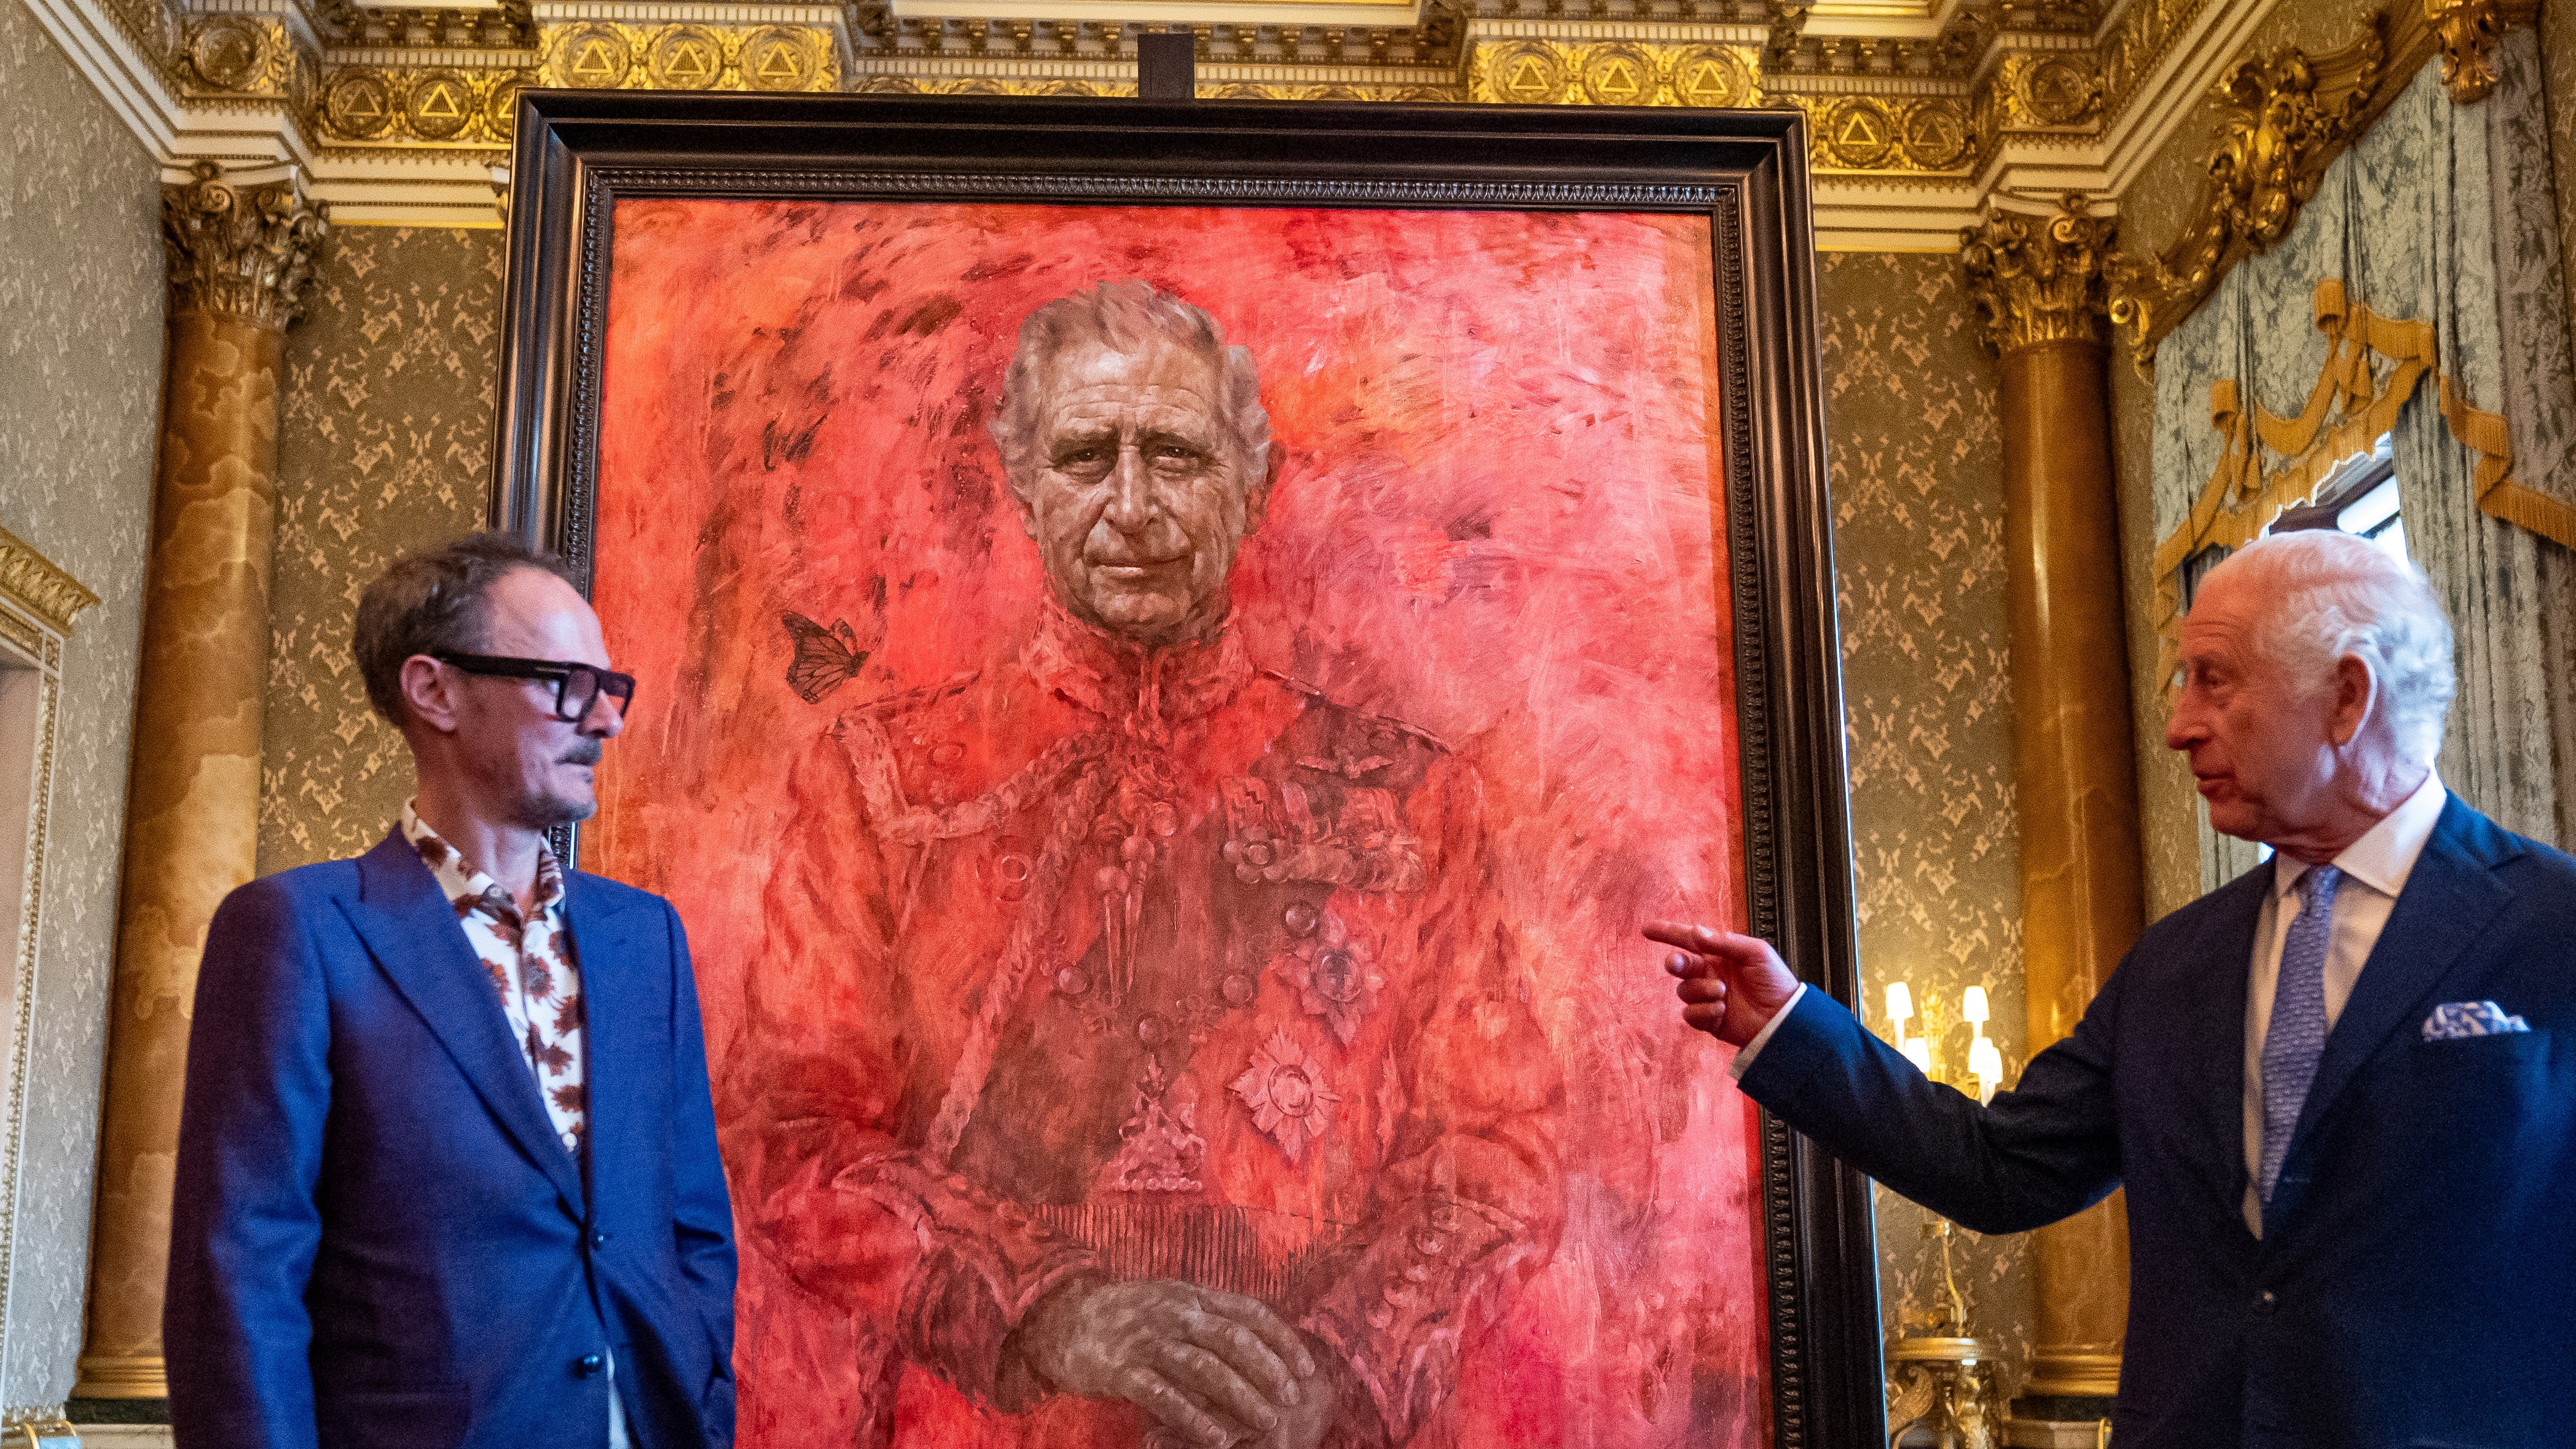  King Charles portrait: 'mystique' or 'monstrosity'? 